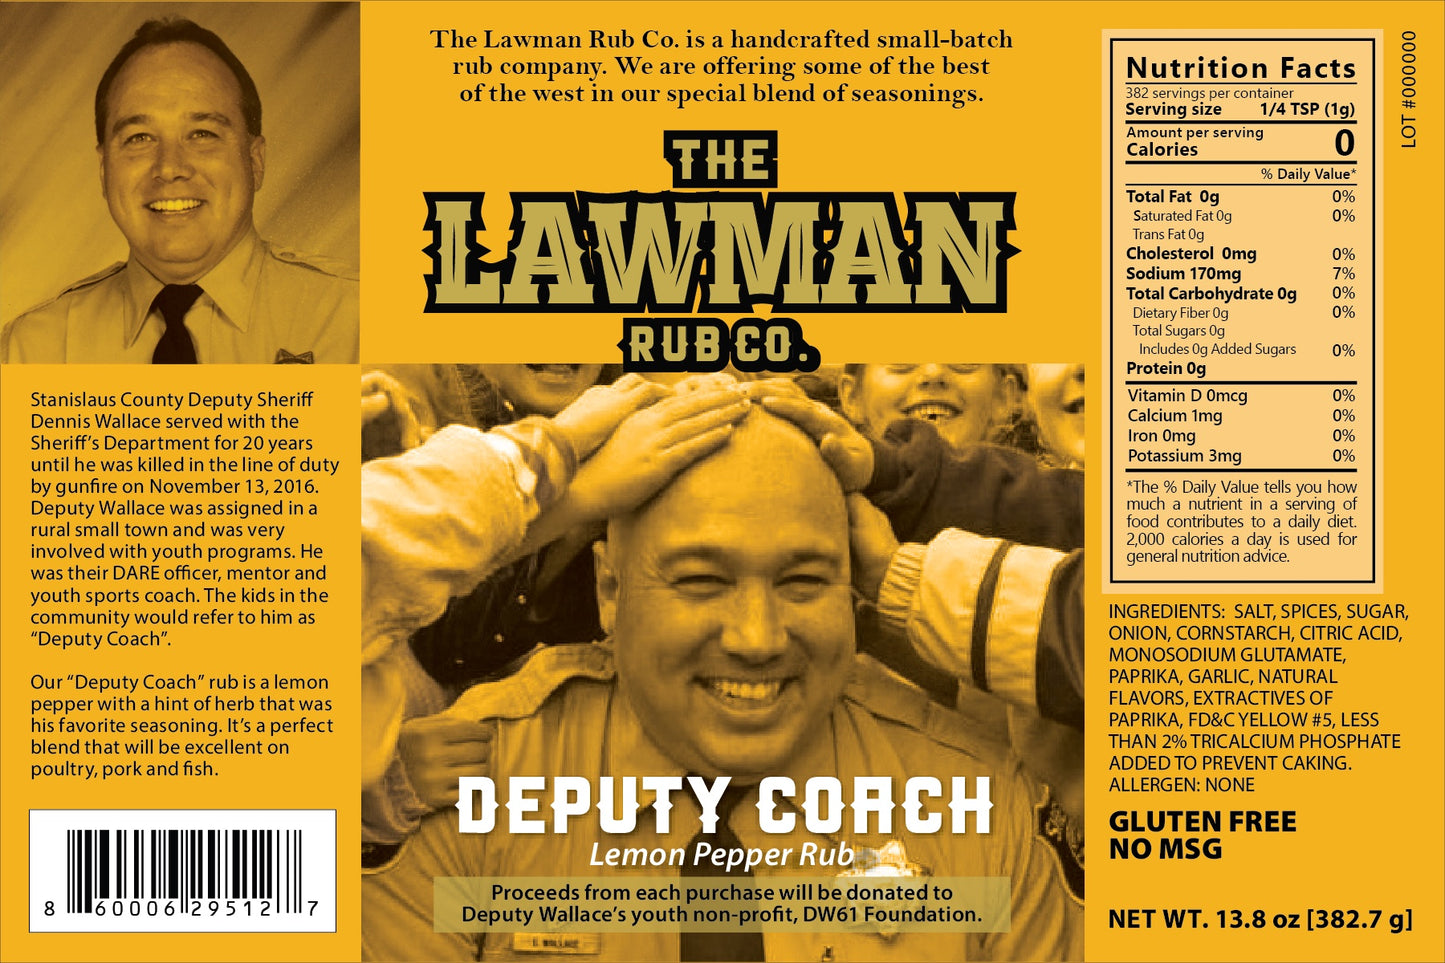 The Lawman Rub Deputy Coach Lemon Pepper